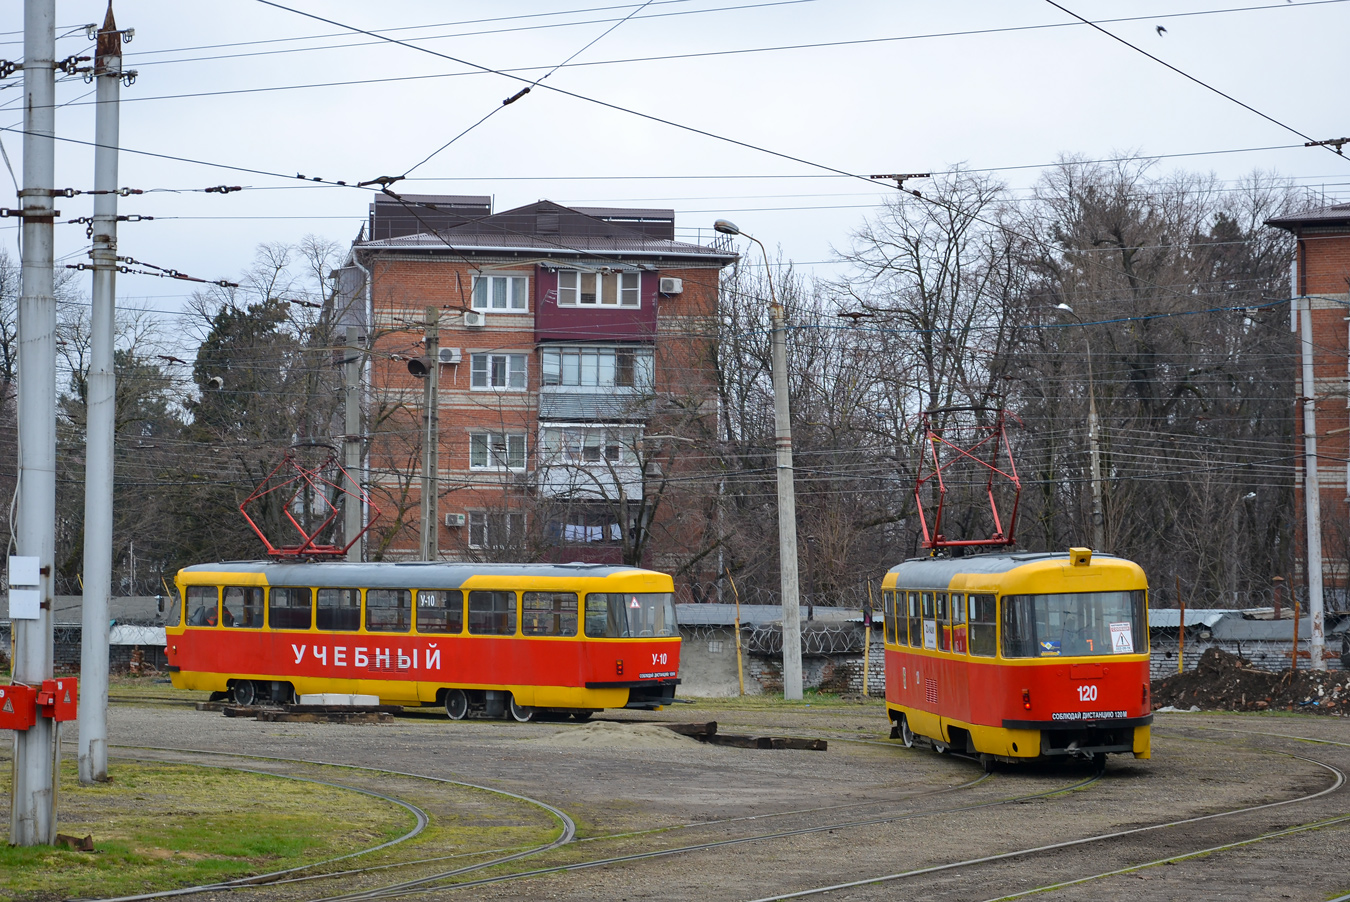 Krasnodar, Tatra T3SU nr. У-10; Krasnodar, Tatra T3SU nr. 120